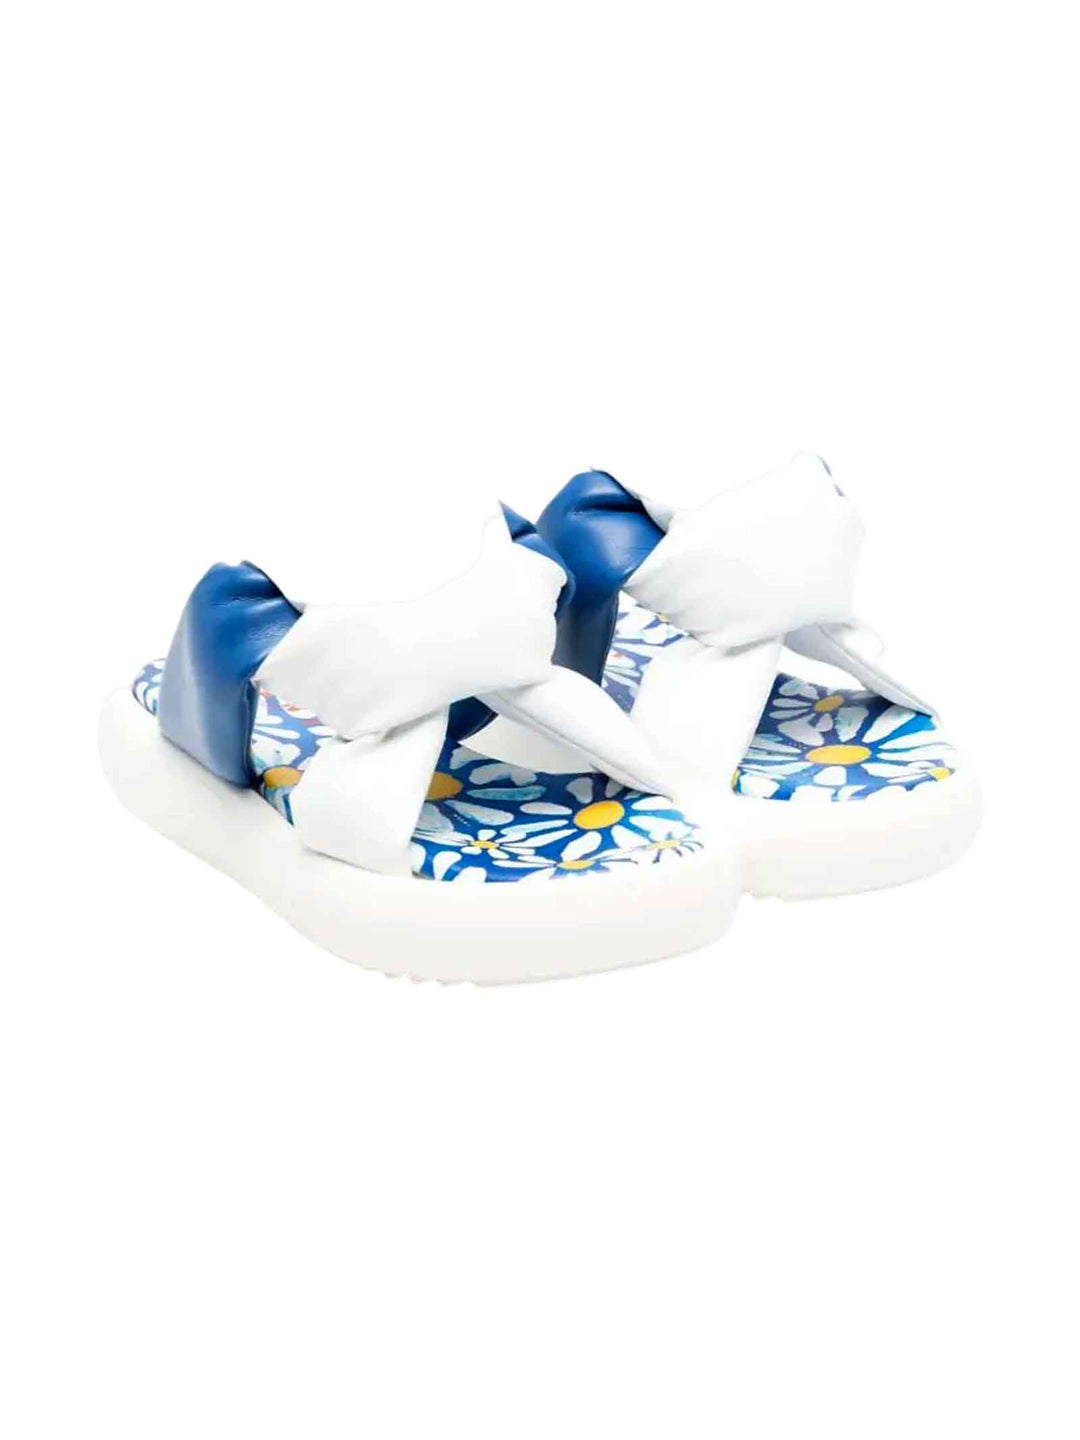 Sandales unisexes blanc/bleu